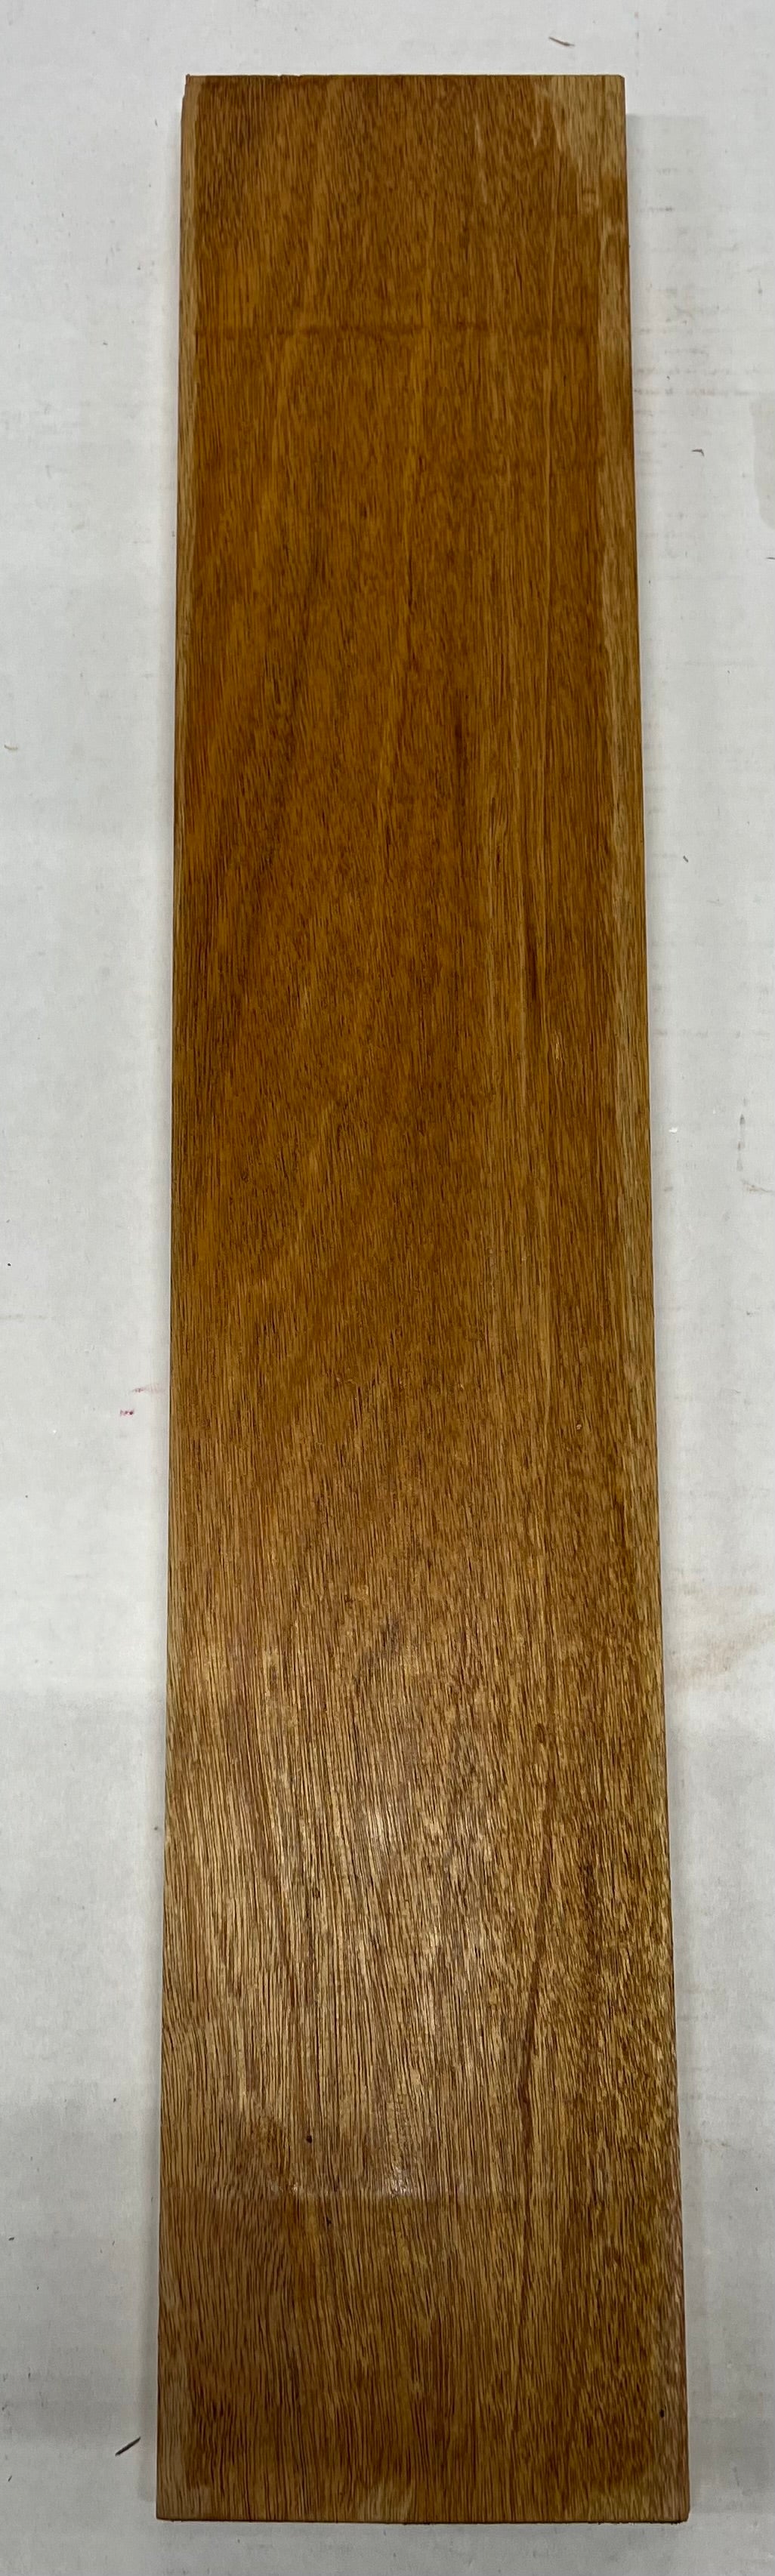 Honduran Mahogany Thin Stock Lumber Board Square Wood Blank 26&quot;x5&quot;x3/4&quot; 